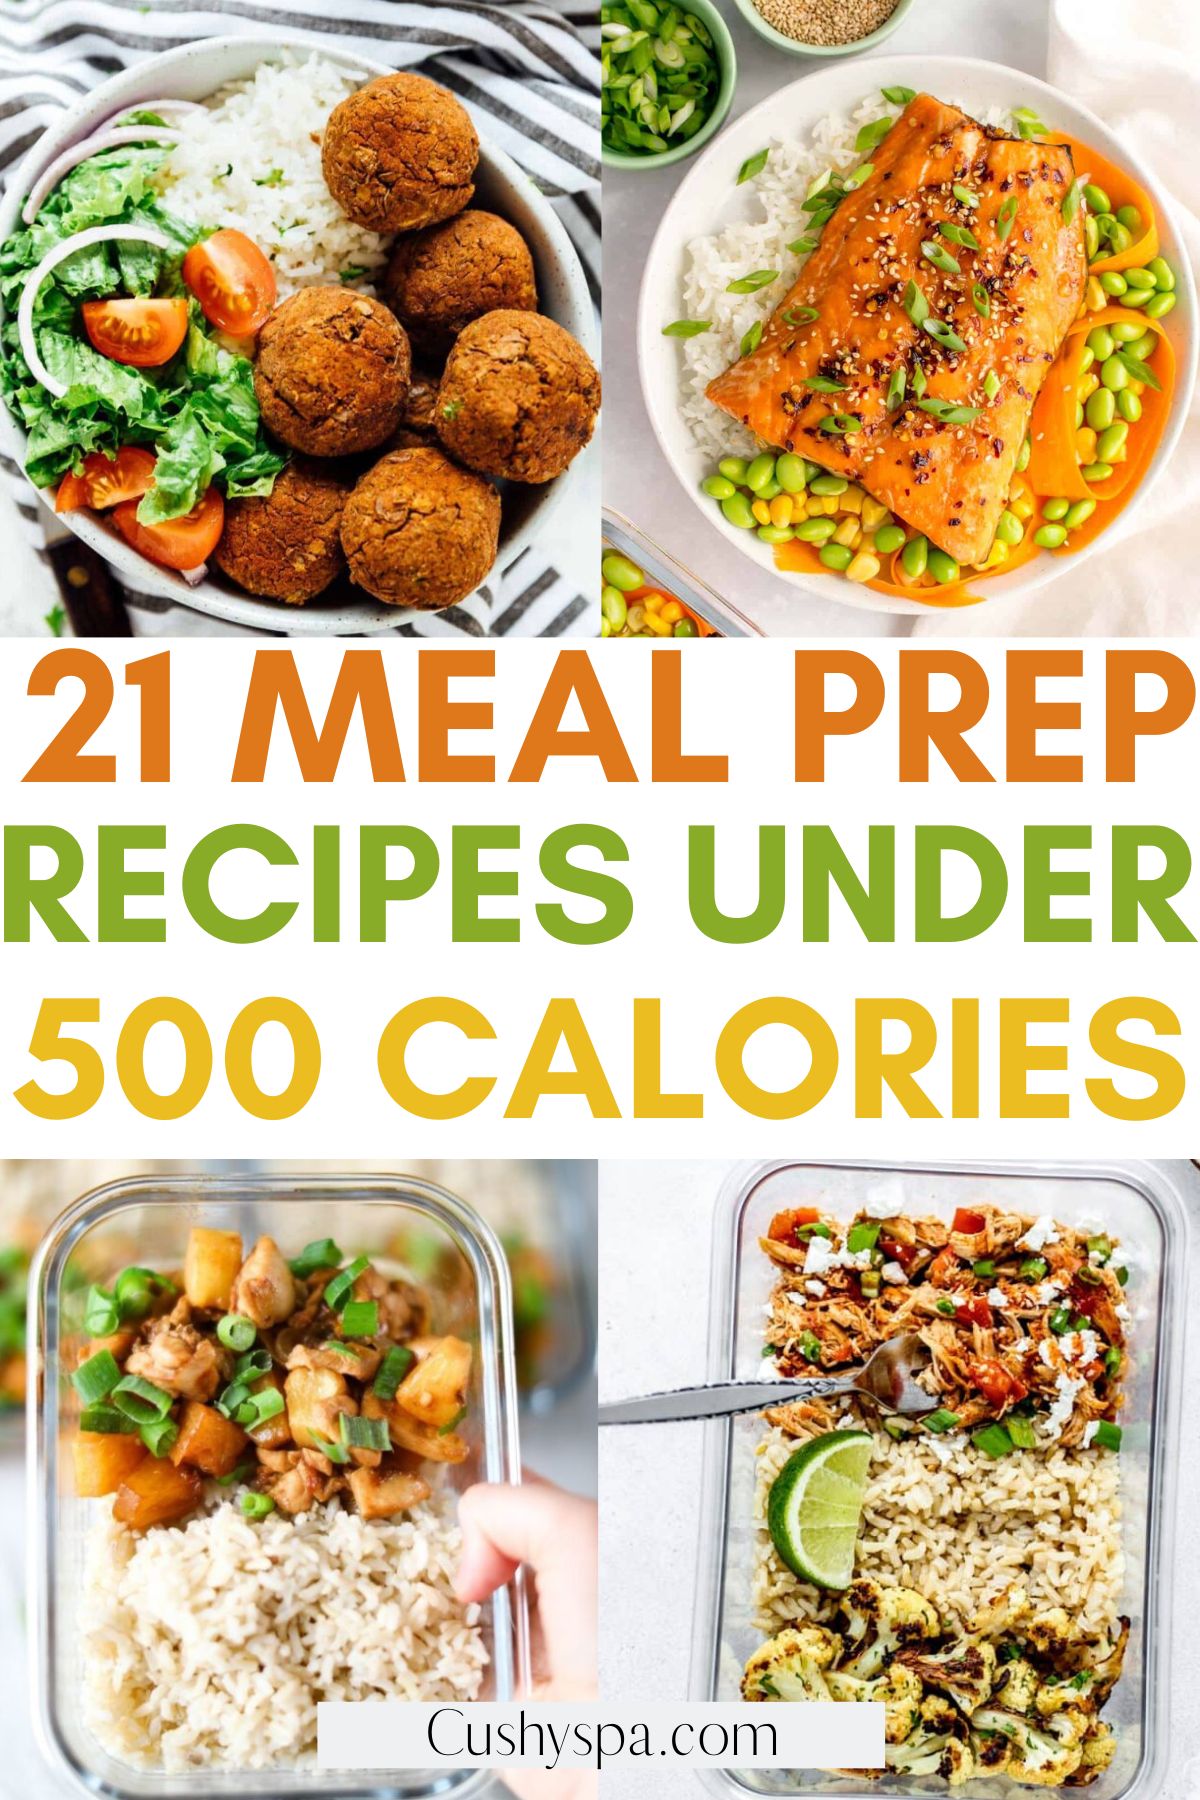 Meal Prep Recipes under 500 Calories